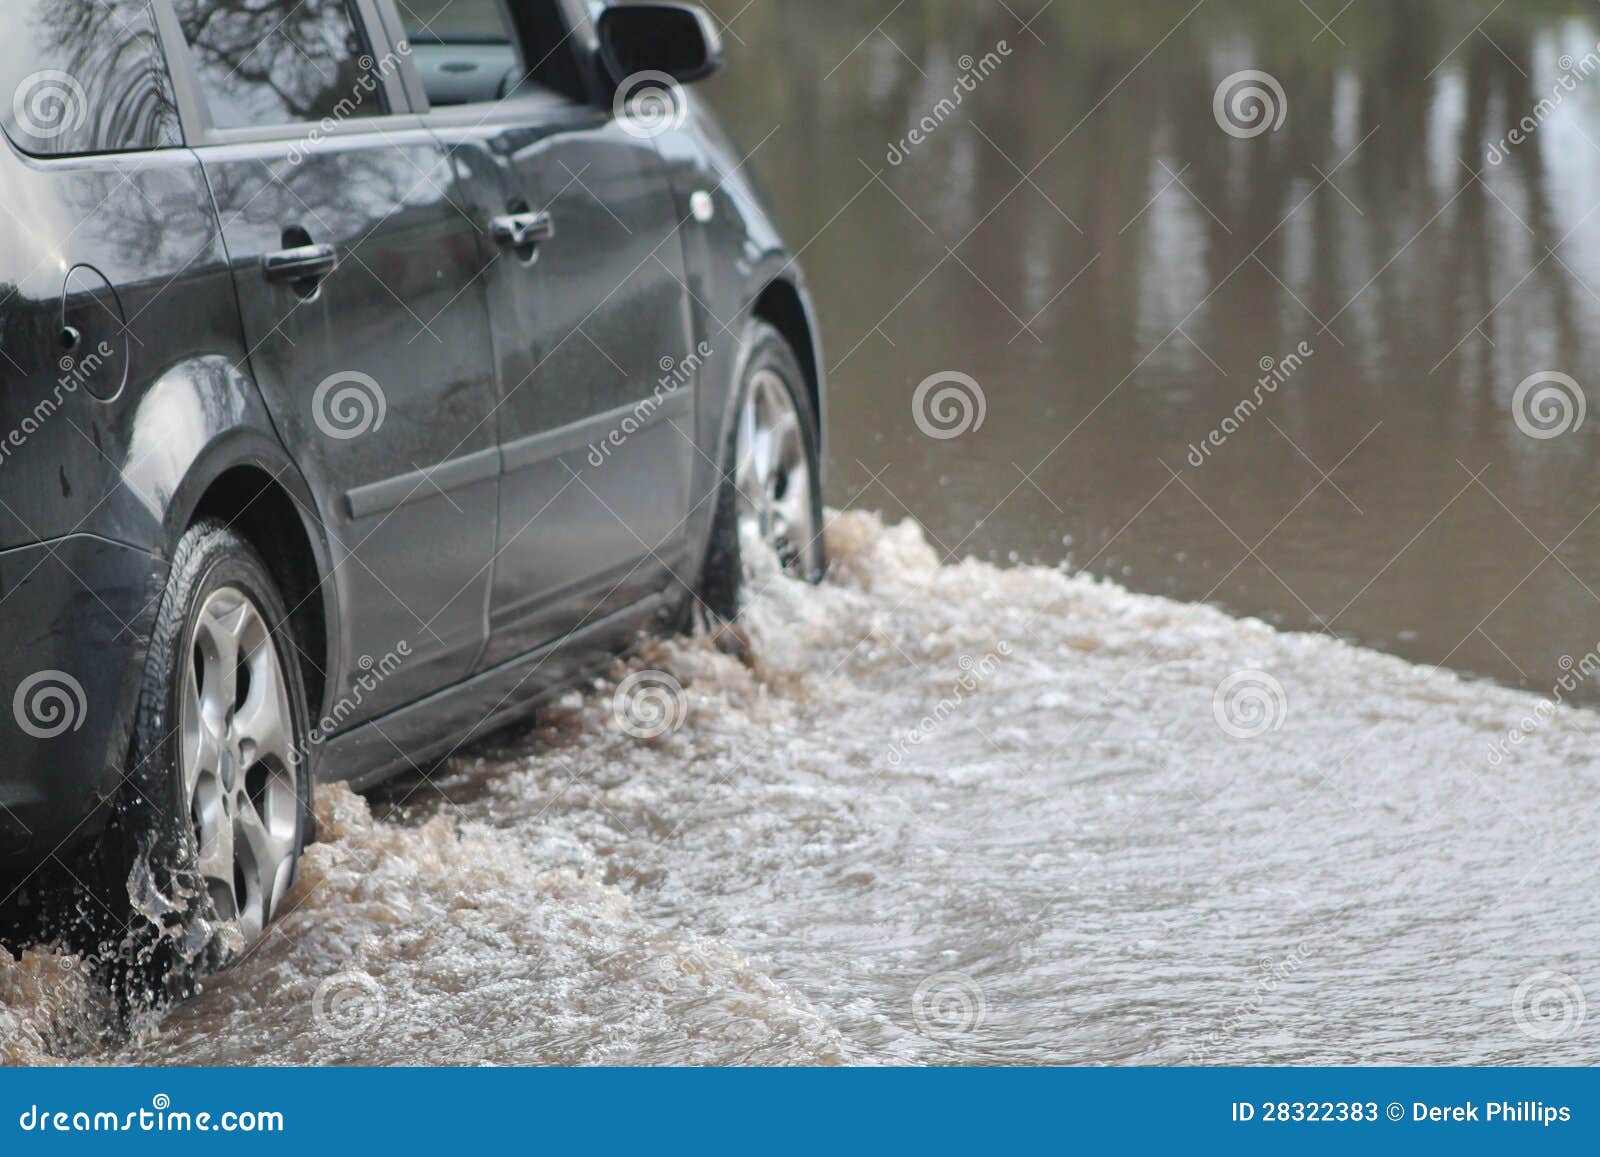 car going through flood